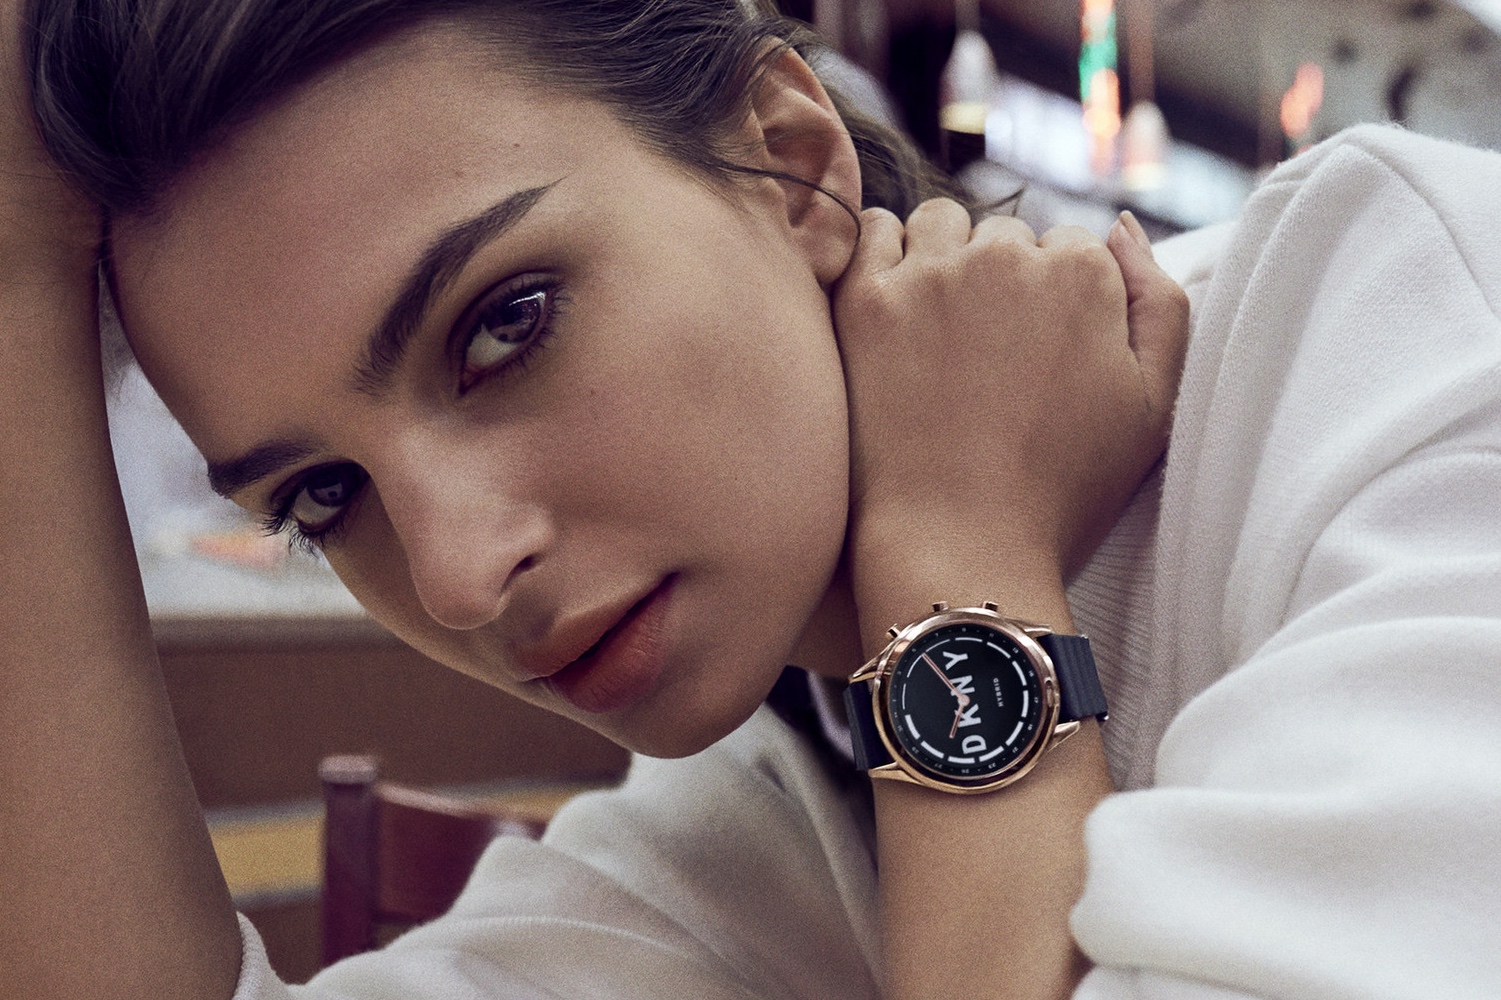 $155 DKNY Minute Hybrid Smartwatch Is Designed For Women | Digital Trends